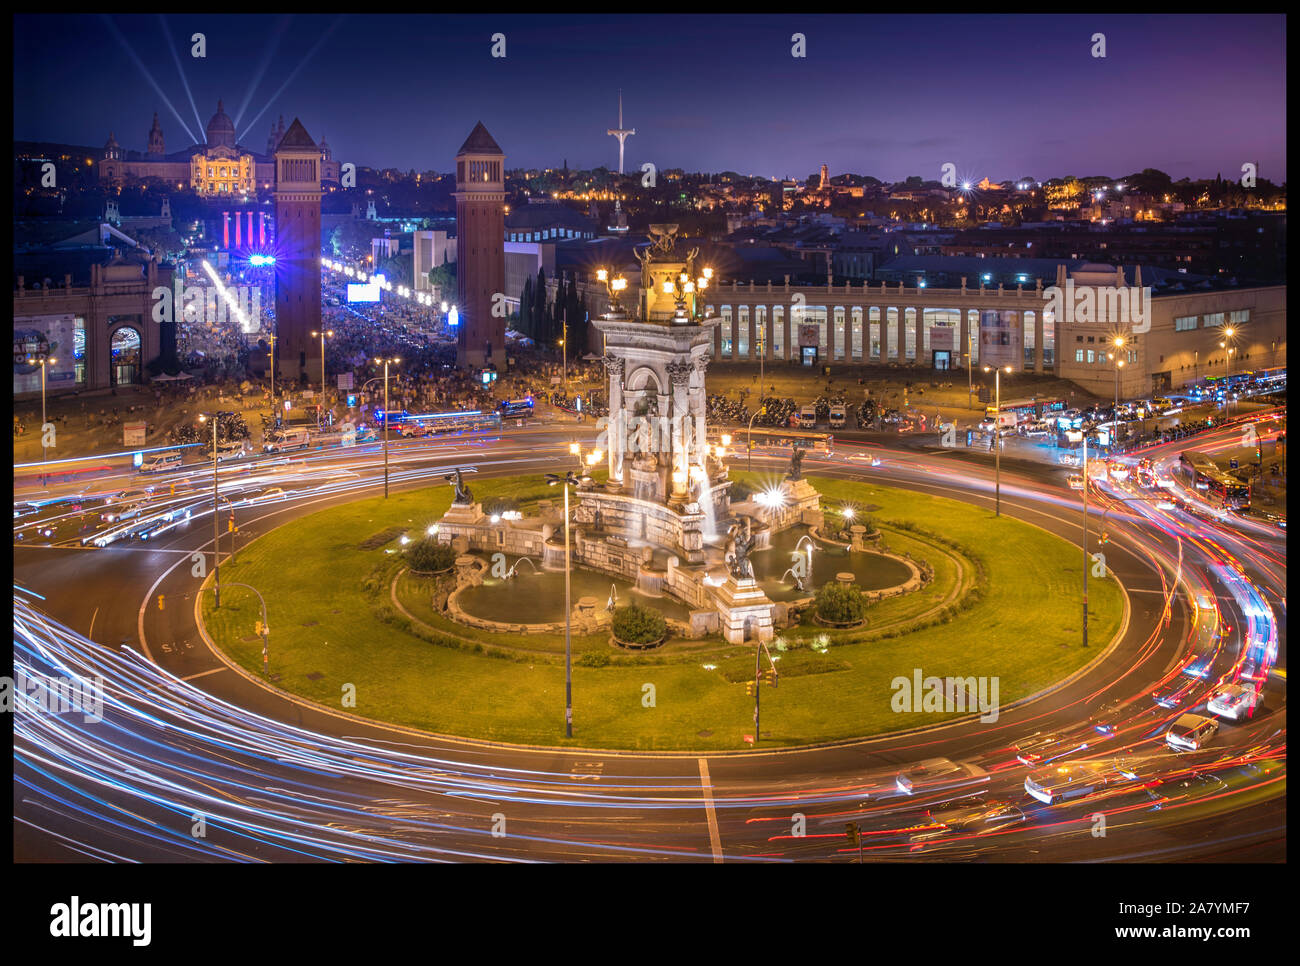 Postcard of Barcelona. Cityscape of Plaza de España, MNAC and Font Màgica in Catalan's capital. Stock Photo